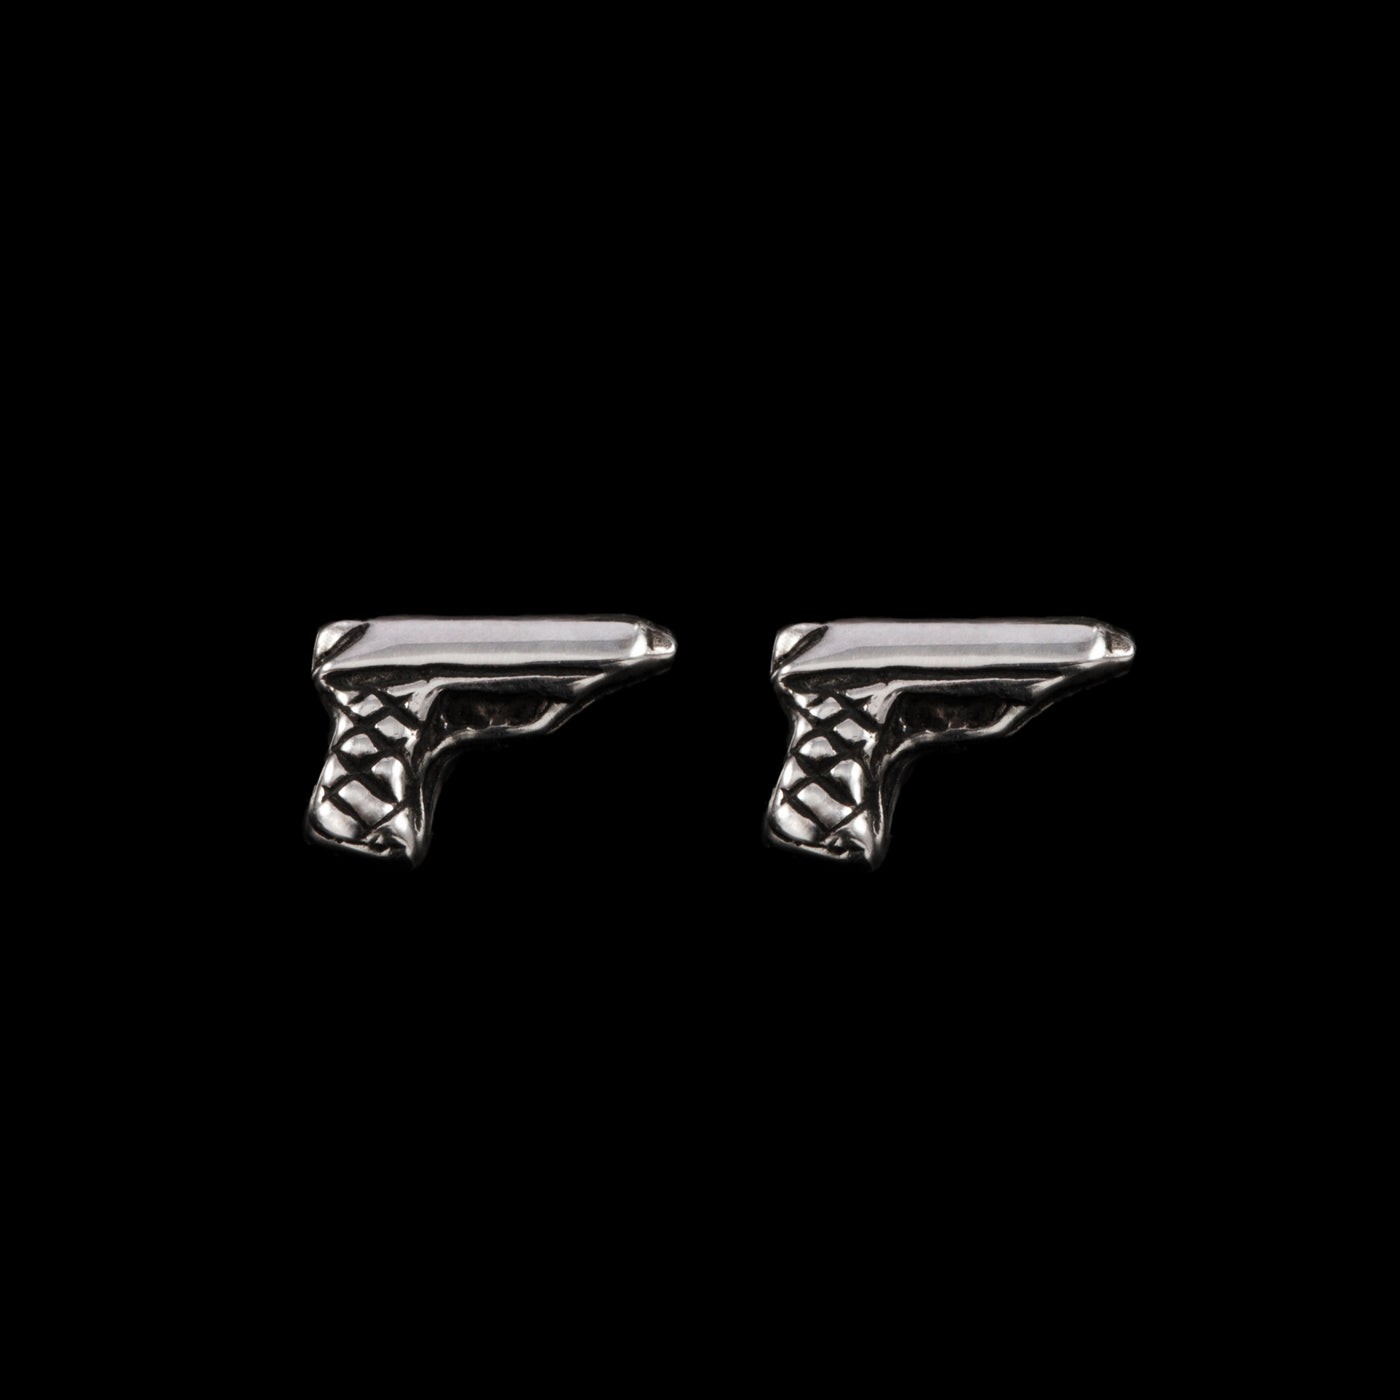 Mini gun stud earrings